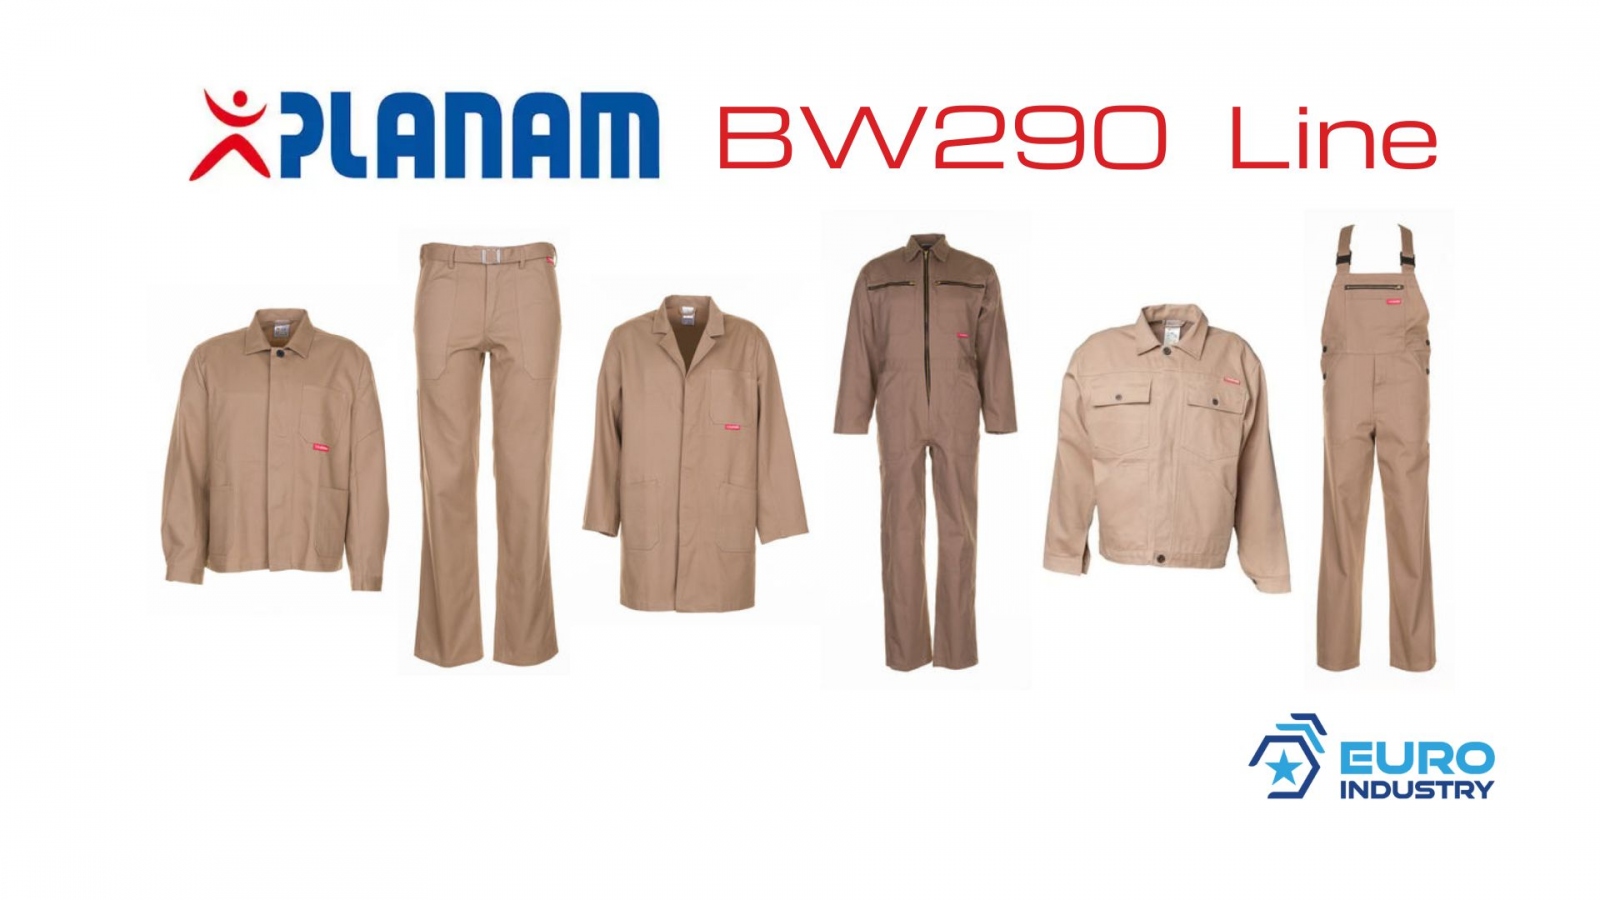 pics/Planam/bw-290/planam-bw-290-linie-beige-khaki-baumwolle-details.jpg